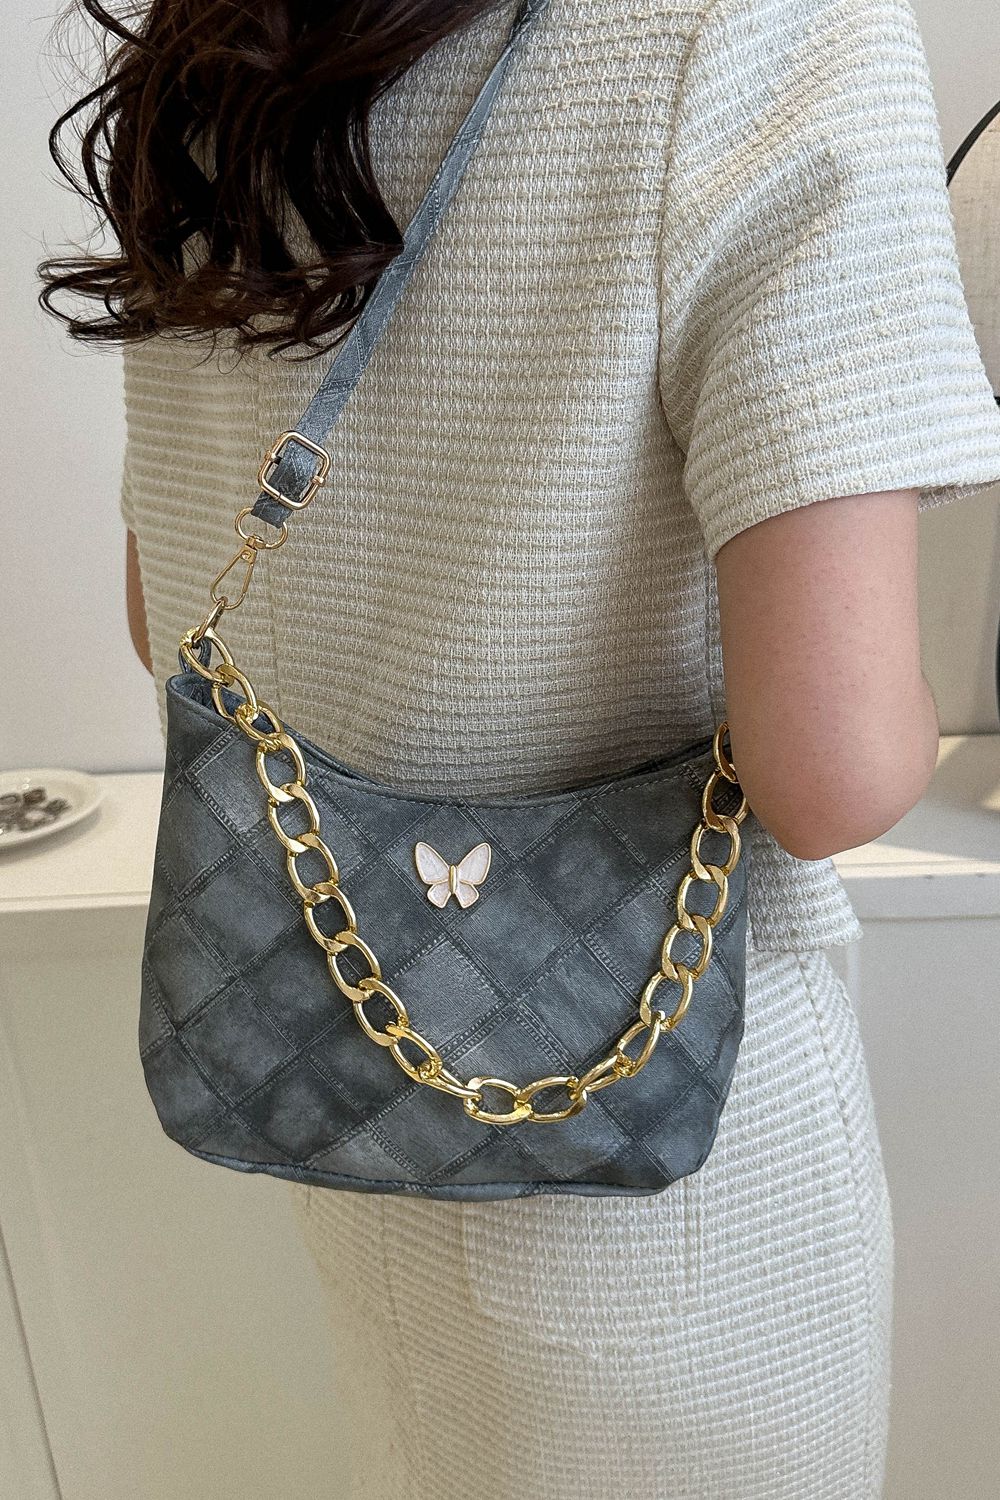 Butterfly Decor Bucket Bag For Women, Trendy Chain Crossbody Bag